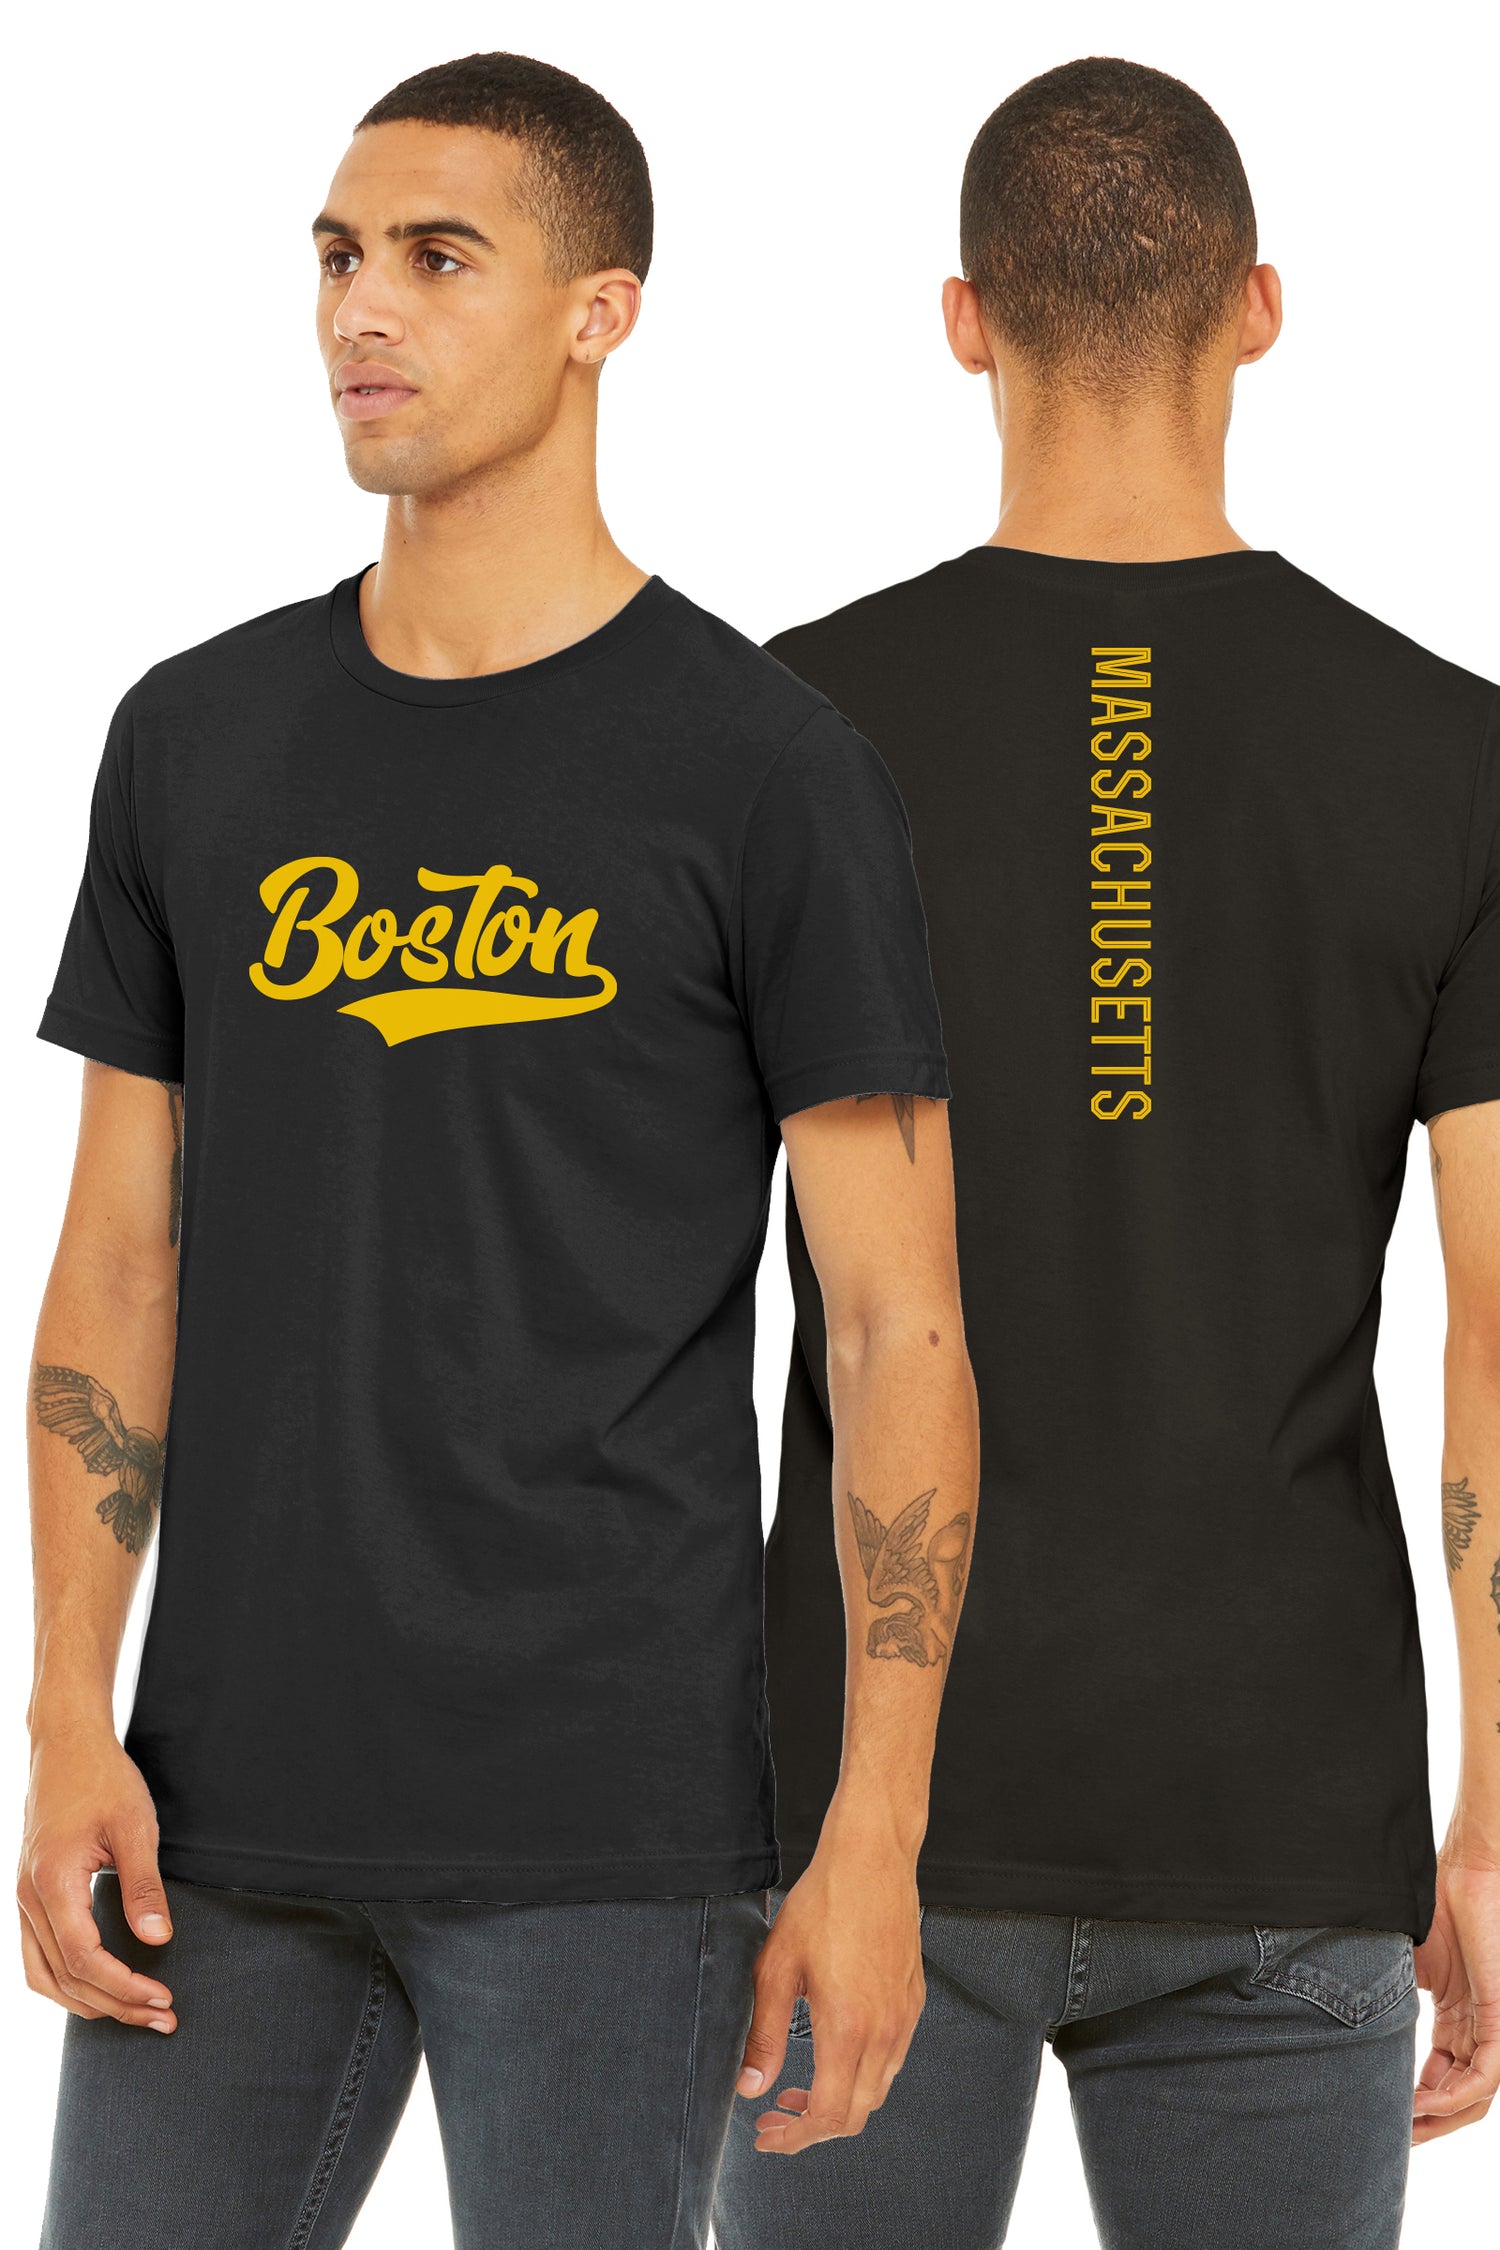 Boston Clothing